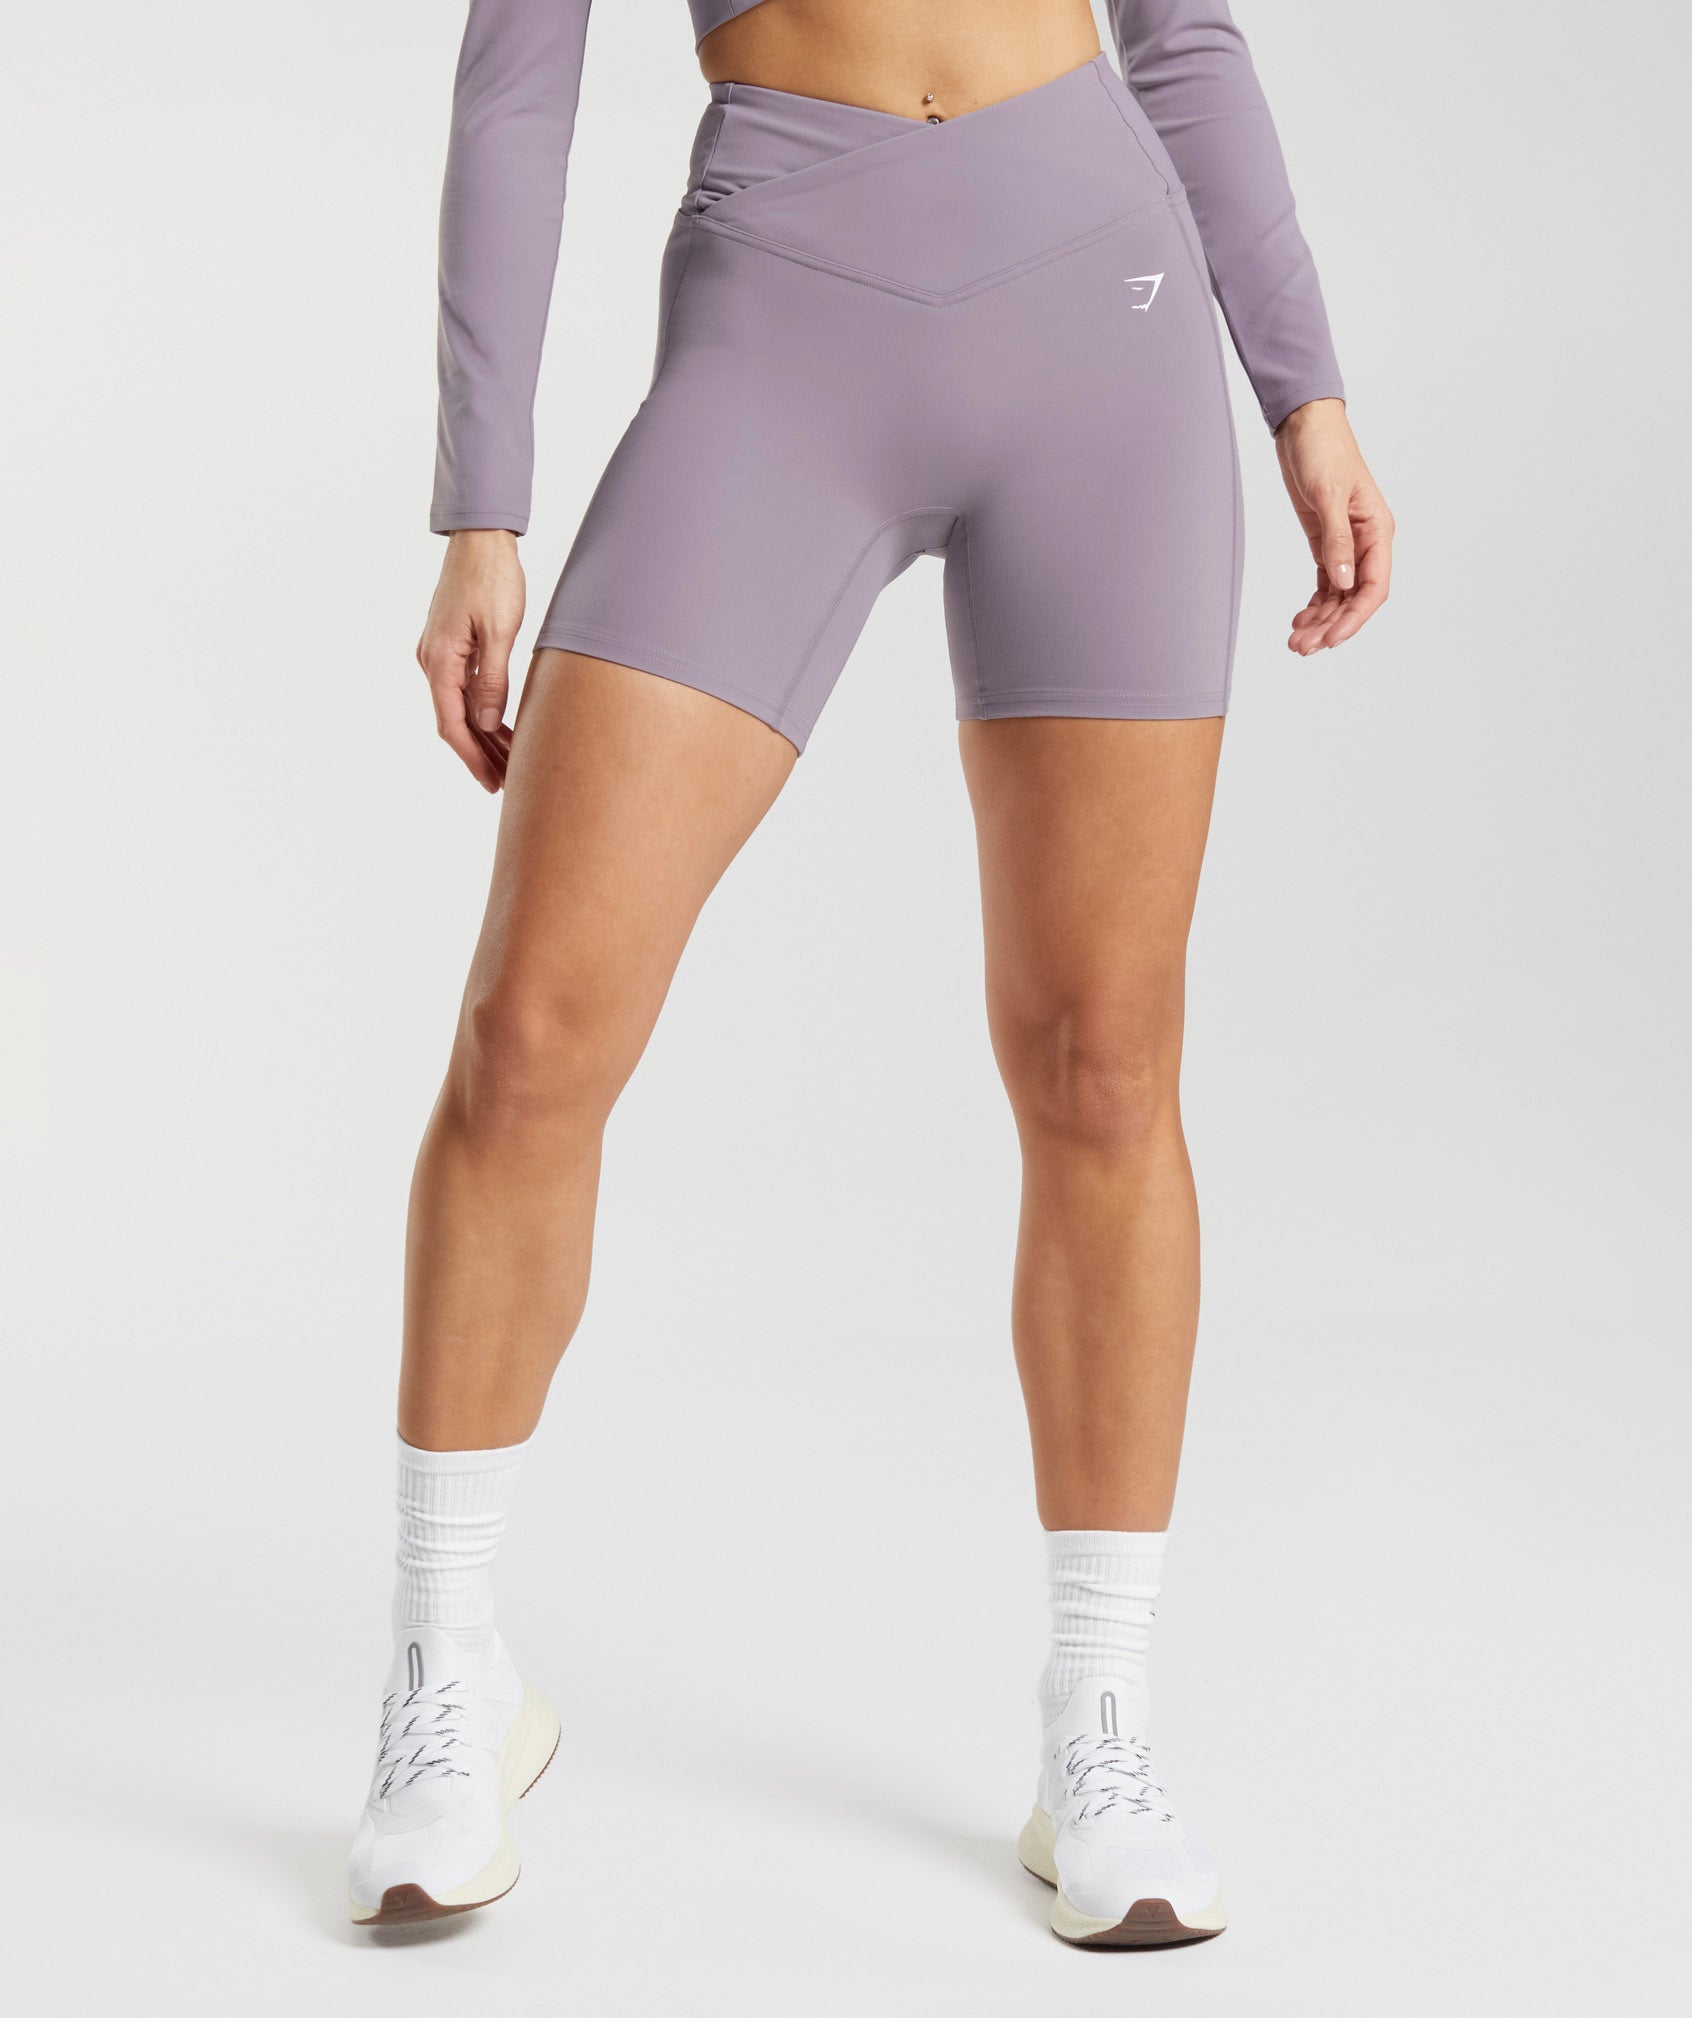 Gymshark Crossover Shorts - Slate Lavender